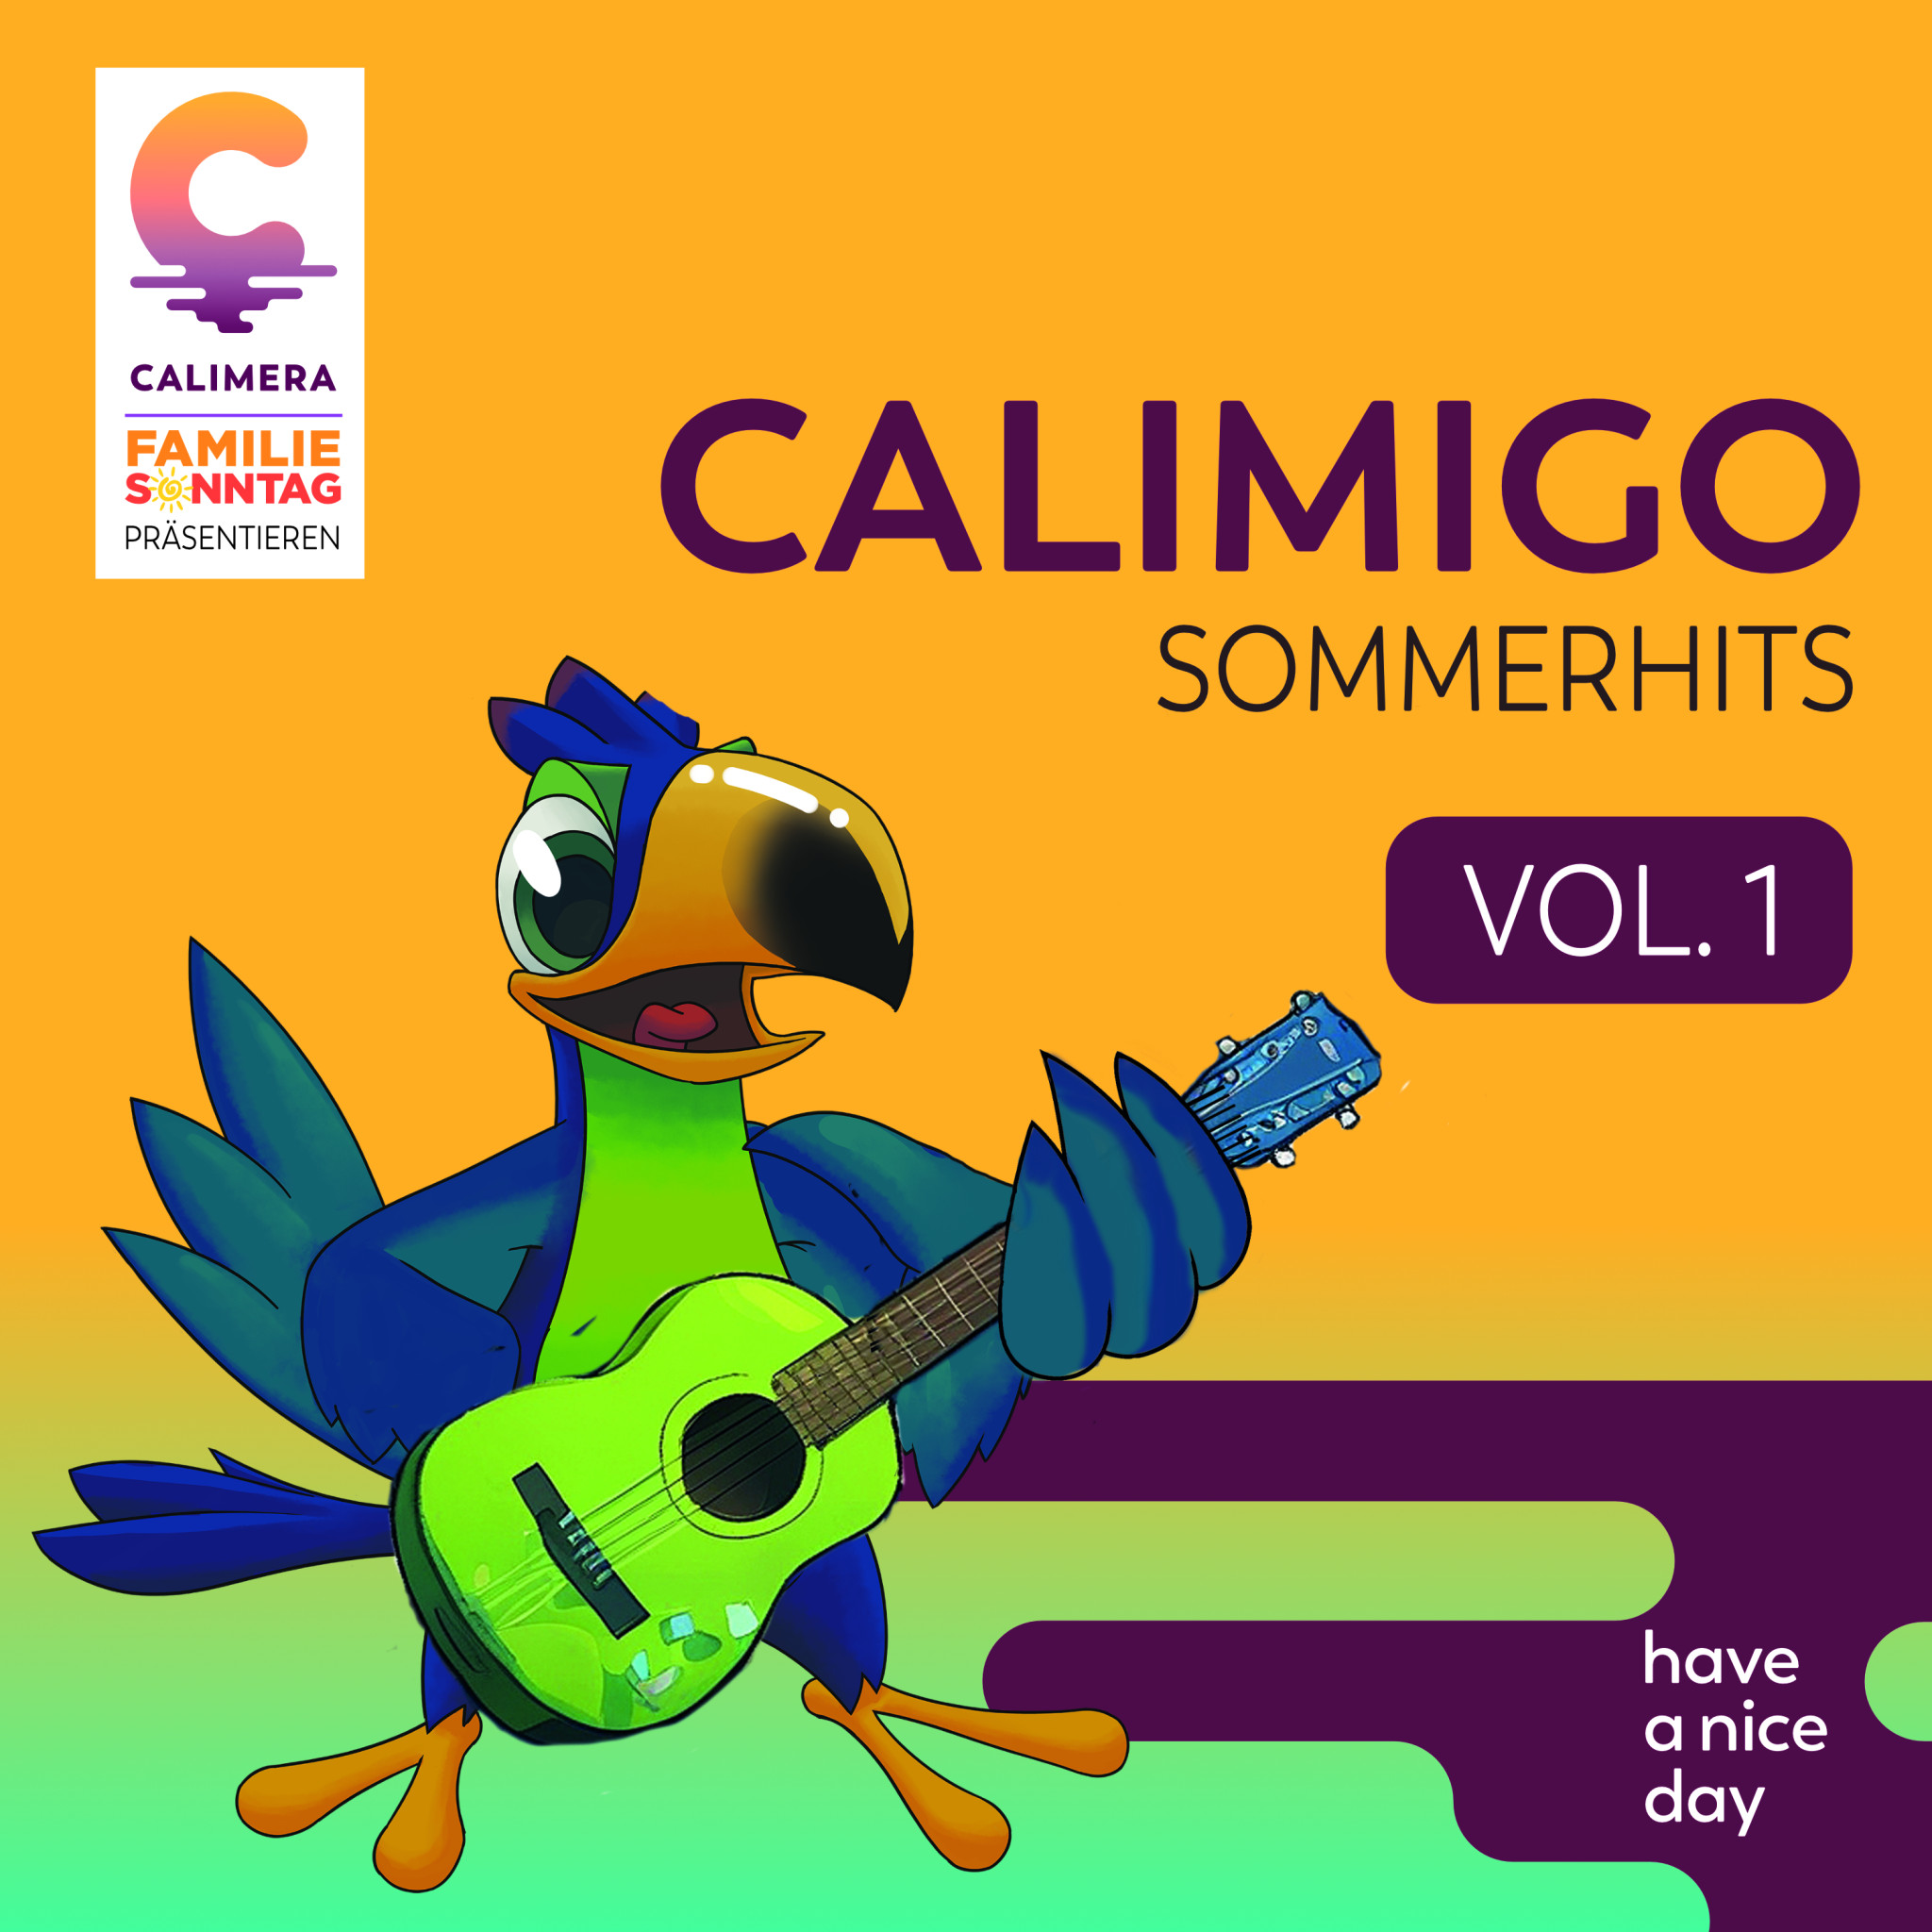 Calimigo Sommerhits Vol. 1 Cover.jpg